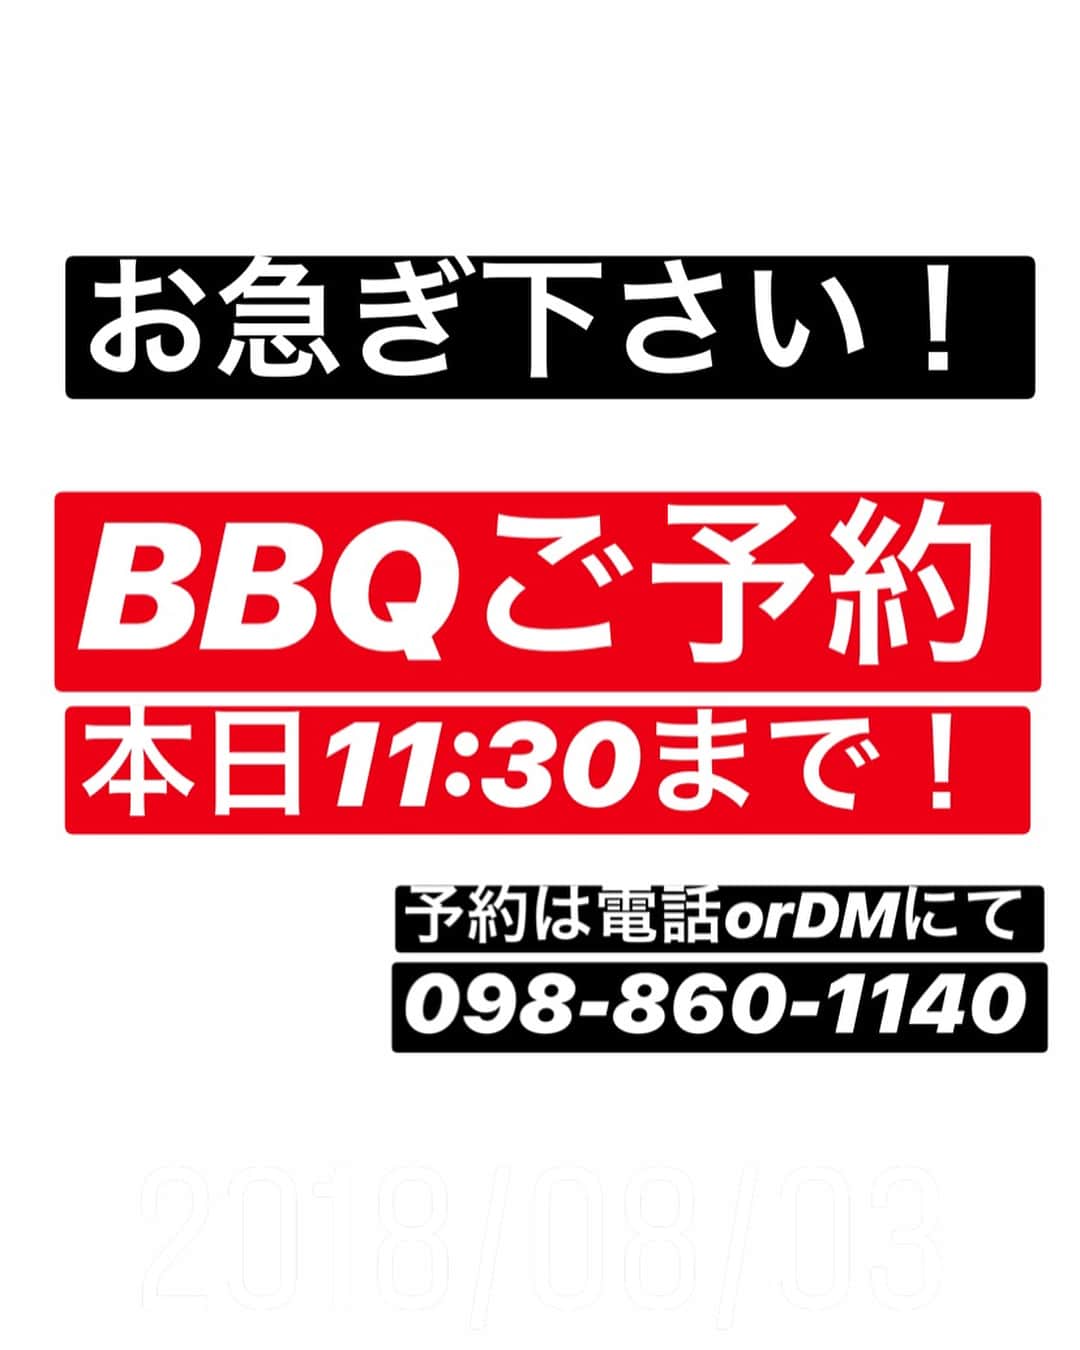 【IMF】ISLAND MUSIC FESTIVAL2018 Okinawaのインスタグラム：「. ⚠️BBQ席 ご予約は、本日11:30まで⚠️ . お早めにご予約下さい‼️ . - BBQプラン - . ※駐車場付き!! 【シングル席  10〜15名様】 ¥30,000 + ¥1,600(肉代、機材代含) . 【ダブル席  20〜25名様】 ¥50,000 + ¥1,600(肉代、機材代含) . . ご予約はお電話orメッセージにてご連絡下さい！ ☎︎098-860-1140 . ※WBF側、IRIE CAMP側どちらかをお選びいただけます。 ※席に限りがあります。ご注意下さい。 . .🔥詳しくはプロフィールリンクをチェック🔥 . . . 《 ISLAND MUSIC FESTIVAL 2018 》 日付 :  2018年 8月11日(土) 時間 : START 12:00 / CLOSE 23:00 ※未成年は19:00までとなります。 場所 : 宜野湾トロピカルビーチ 電話番号 : 098-860-1140  #islandmusicfestival #imf#waterbubblefestival#imf2018 #iriecamp#okinawa#japan#沖縄 #1日中遊び尽くせ!! #沖縄初#極寒プール#水上ブランコ #ビール横丁#マリンスポーツ#BBQ #フォトジェニック #vip#1Lビール#パリピ#party #トロピカルビーチ #トロピ #泡パ #泡フェス」